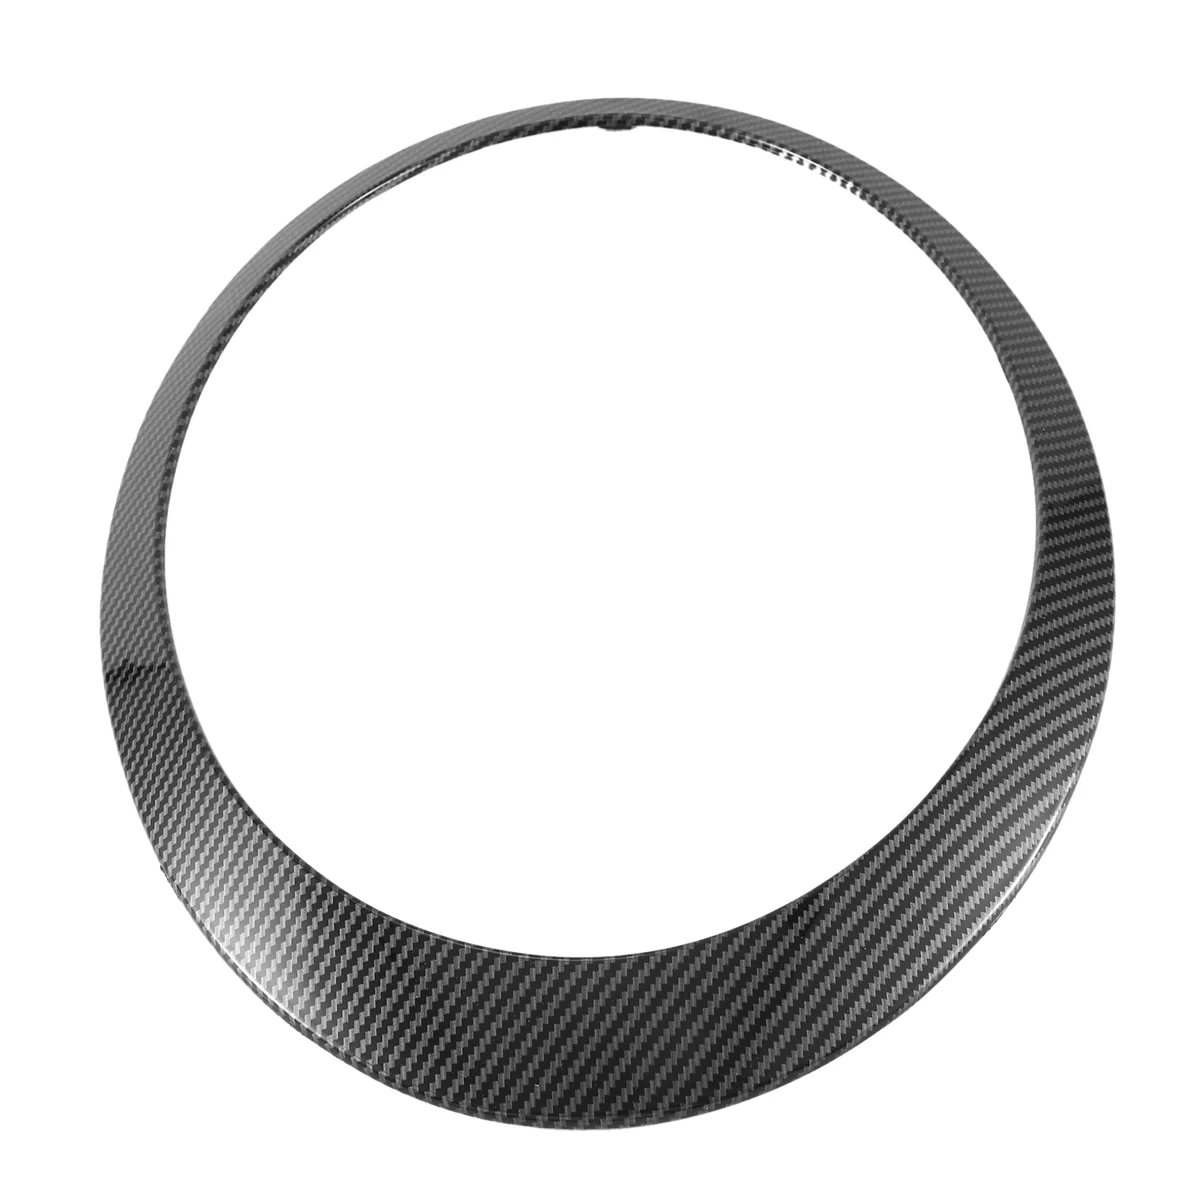 

51137149905 Carbon R Headlight Trim Frame Ring Cover Headlight Bright Frame Cover Decorative Ring for BMW Mini R55 R56